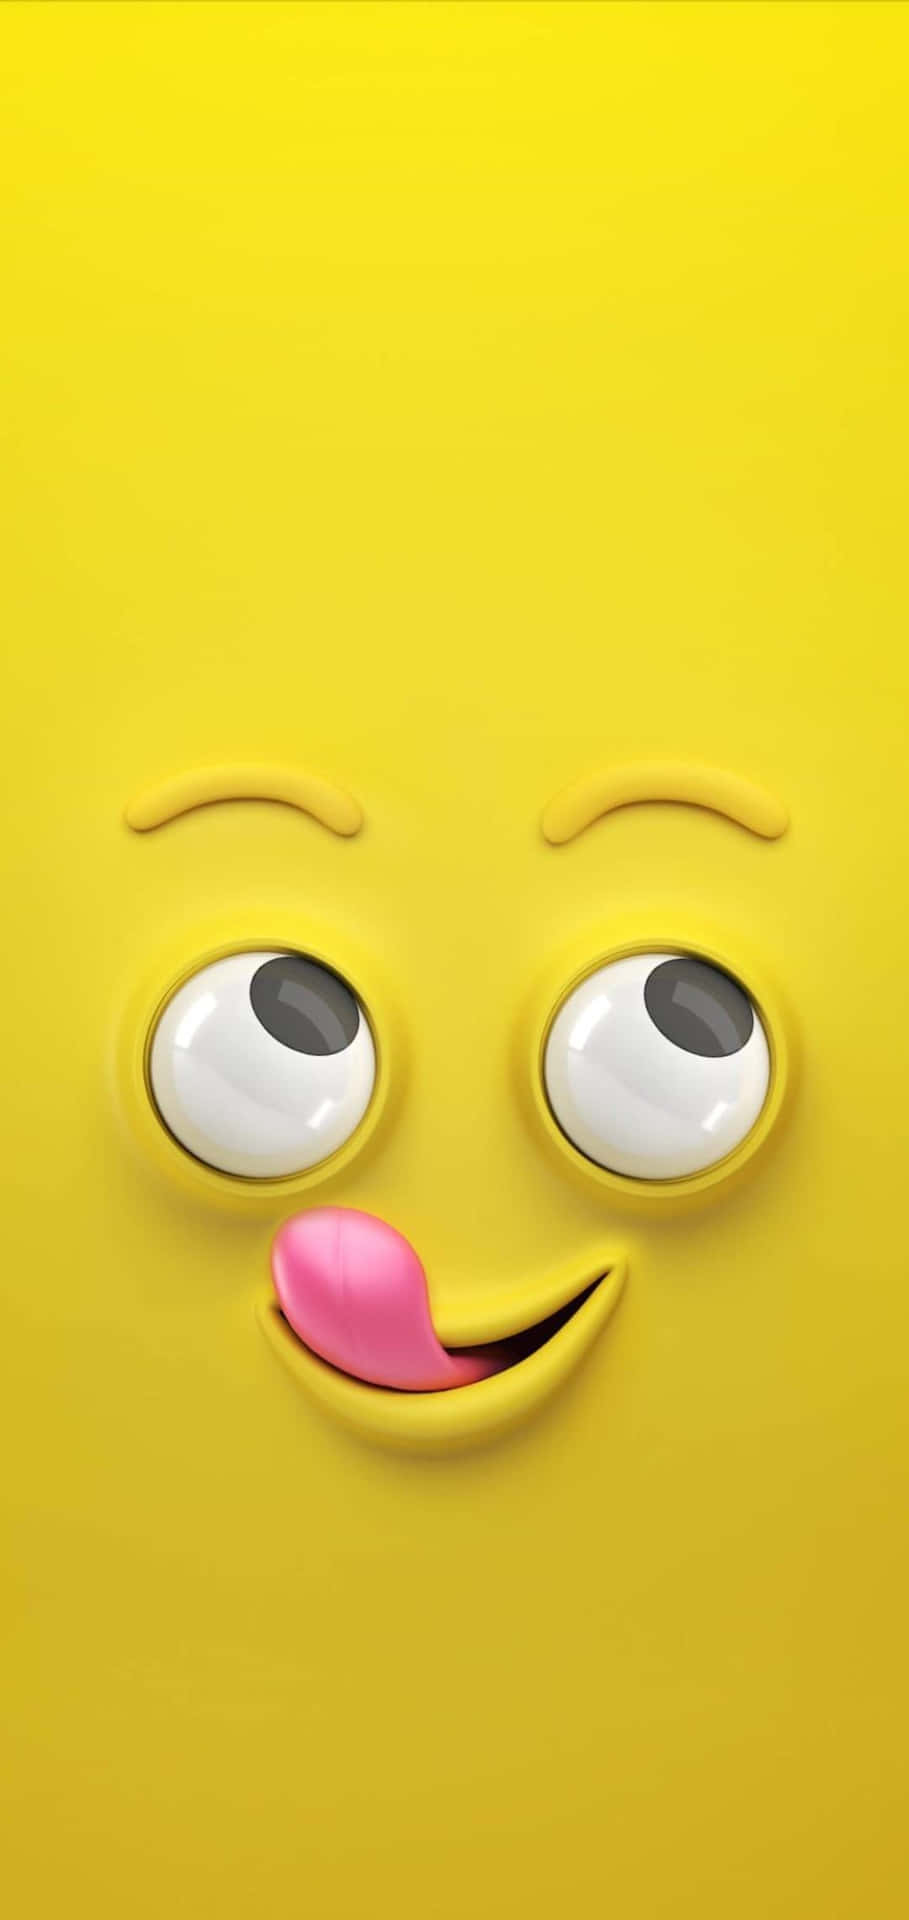 Free Cute Emoji Wallpaper Downloads, [100+] Cute Emoji Wallpapers for FREE  